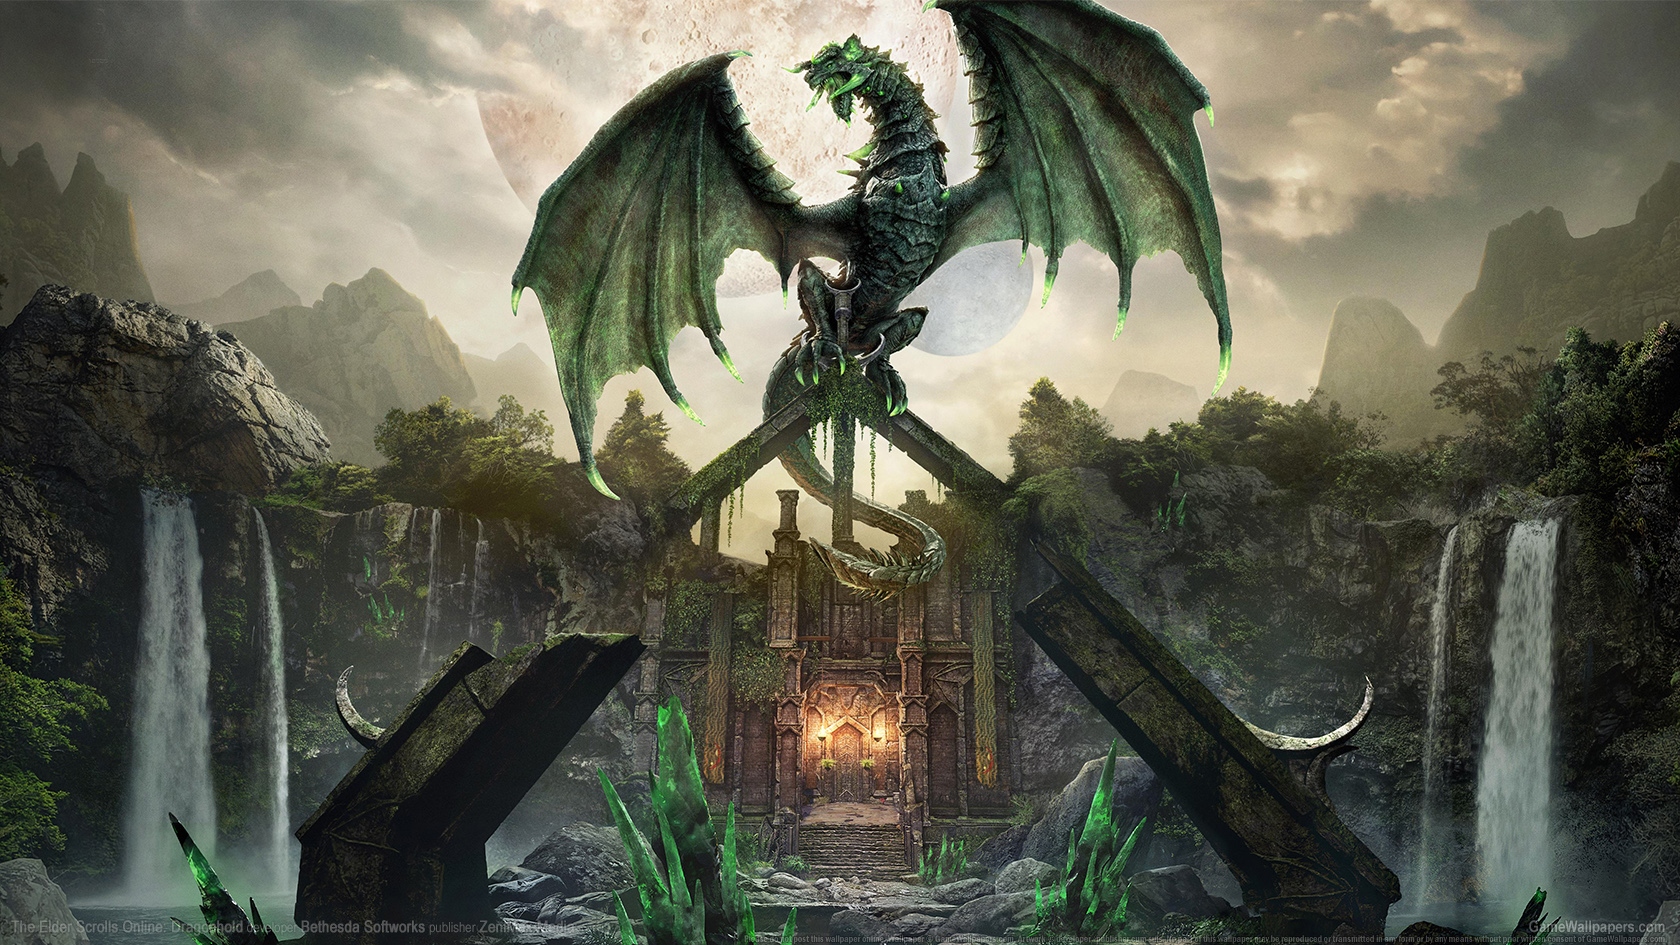 The Elder Scrolls Online: Dragonhold 1680x945 wallpaper or background 01